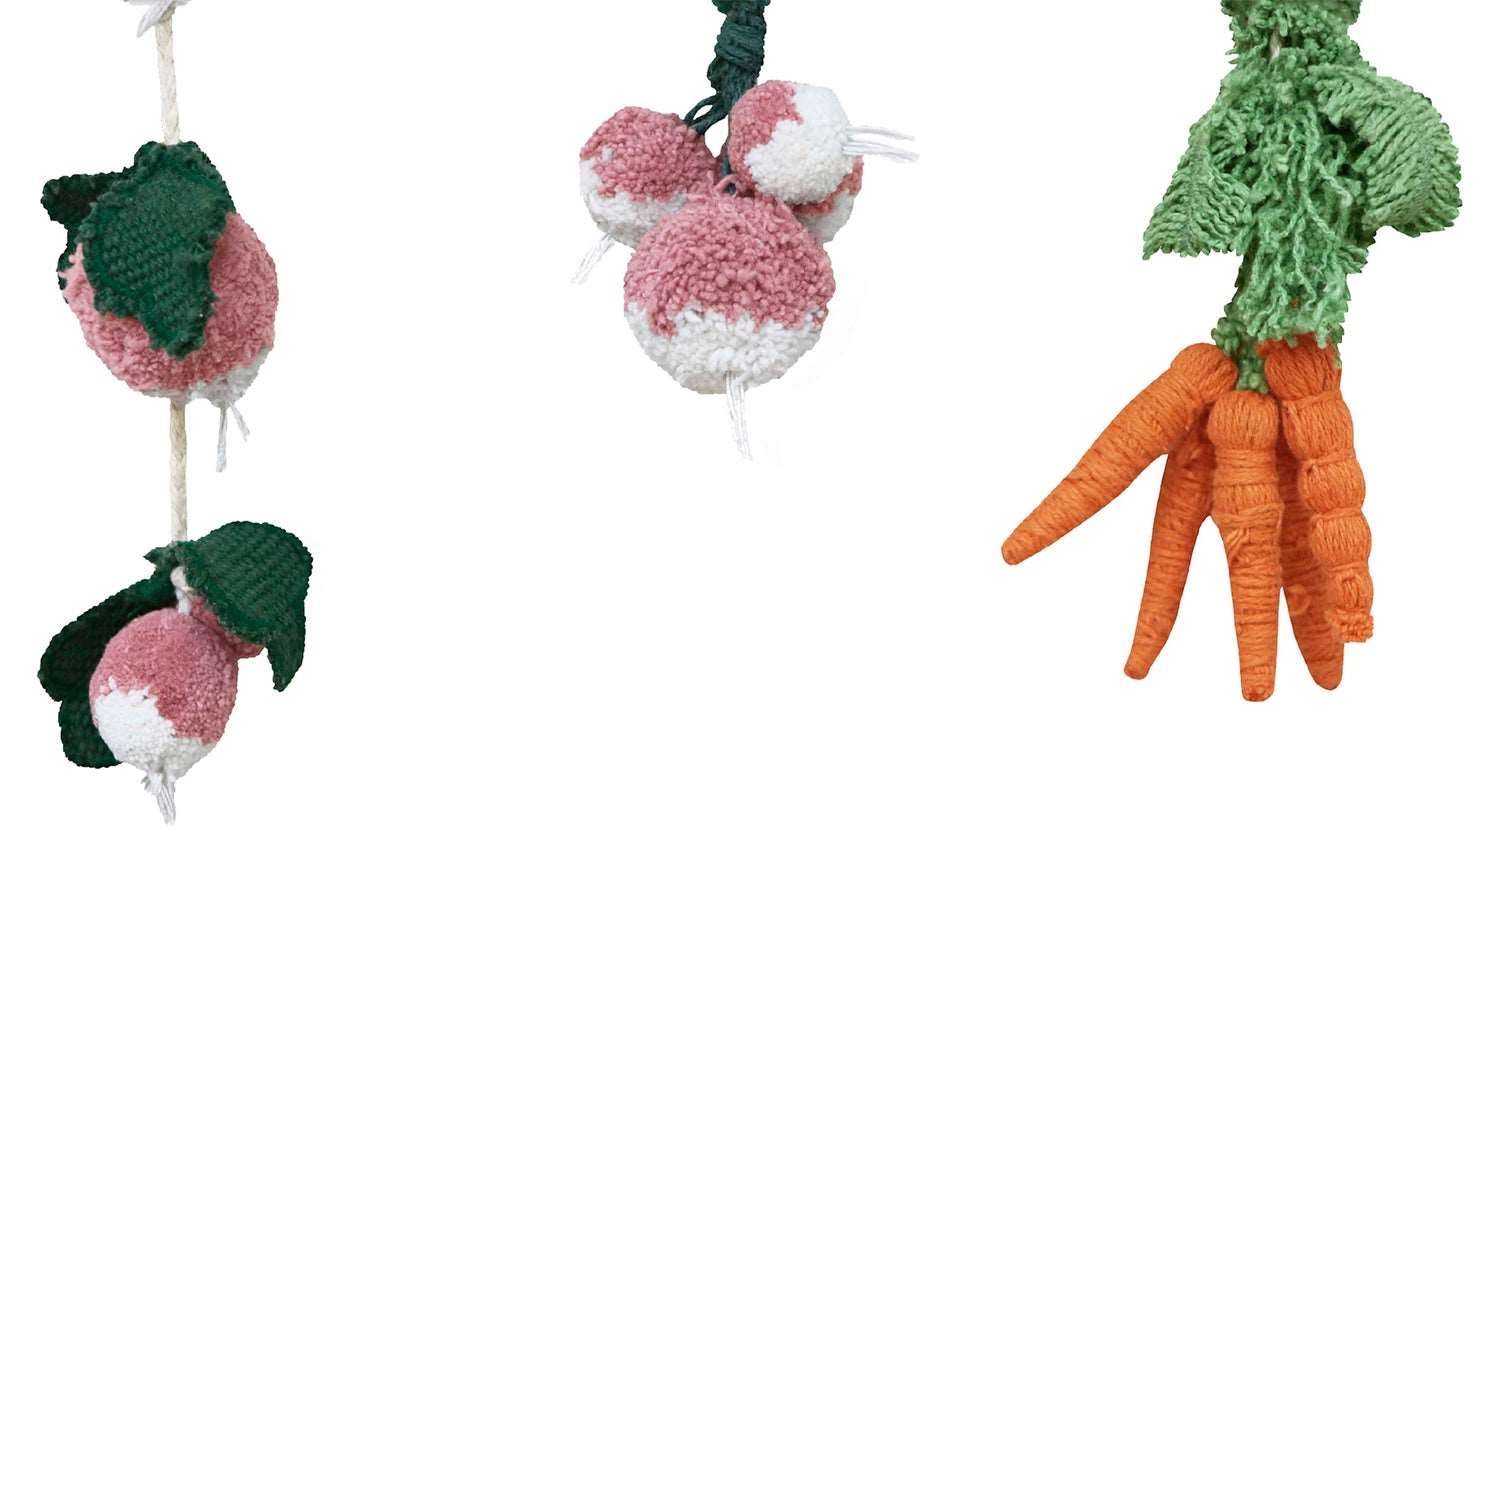 Wall Hanger Veggies - Oli&Carol